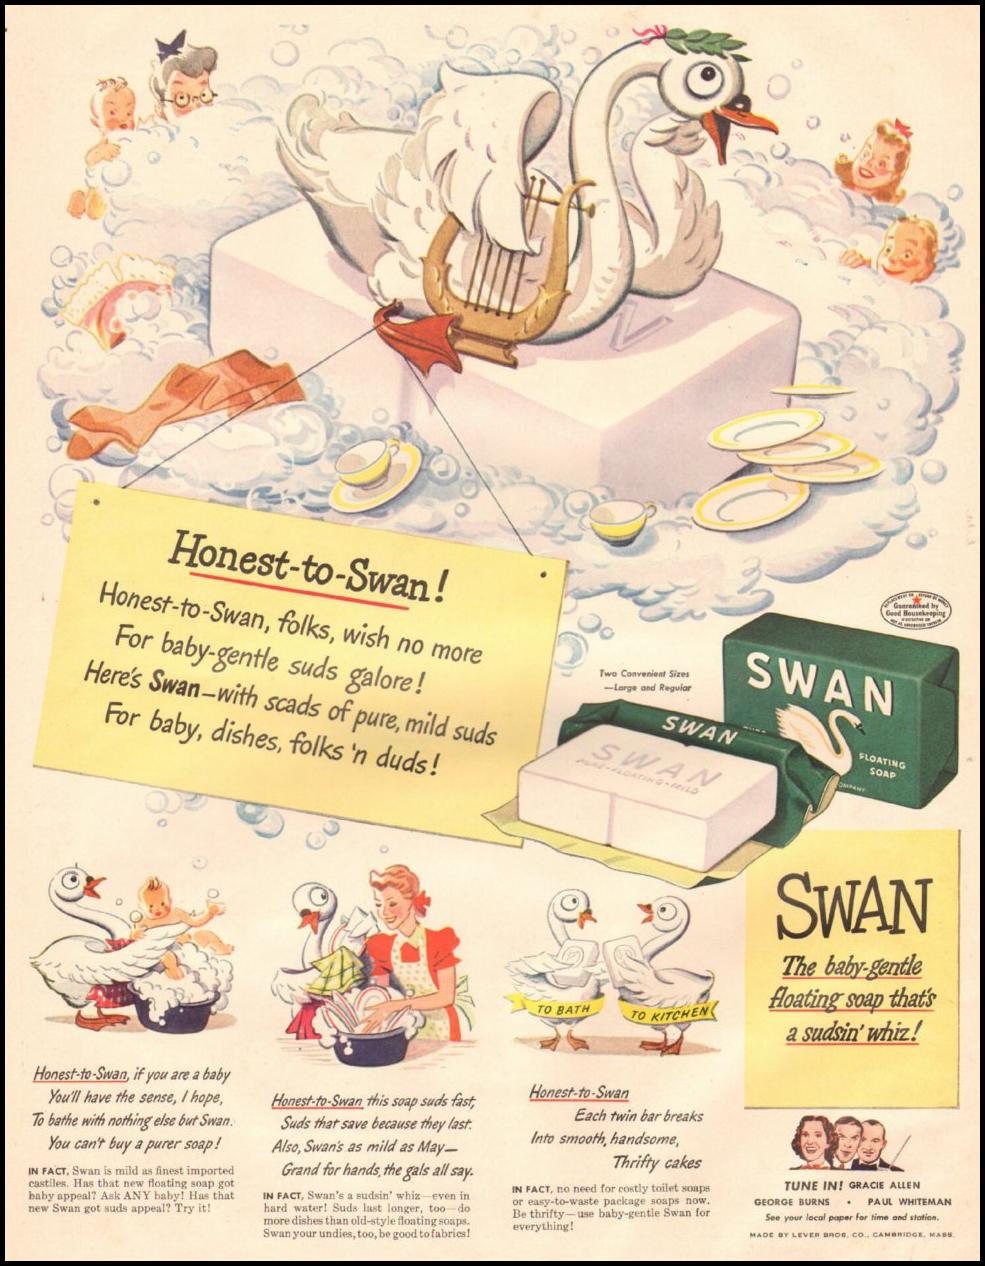 SWAN SOAP
LIFE
06/22/1942
p. 30